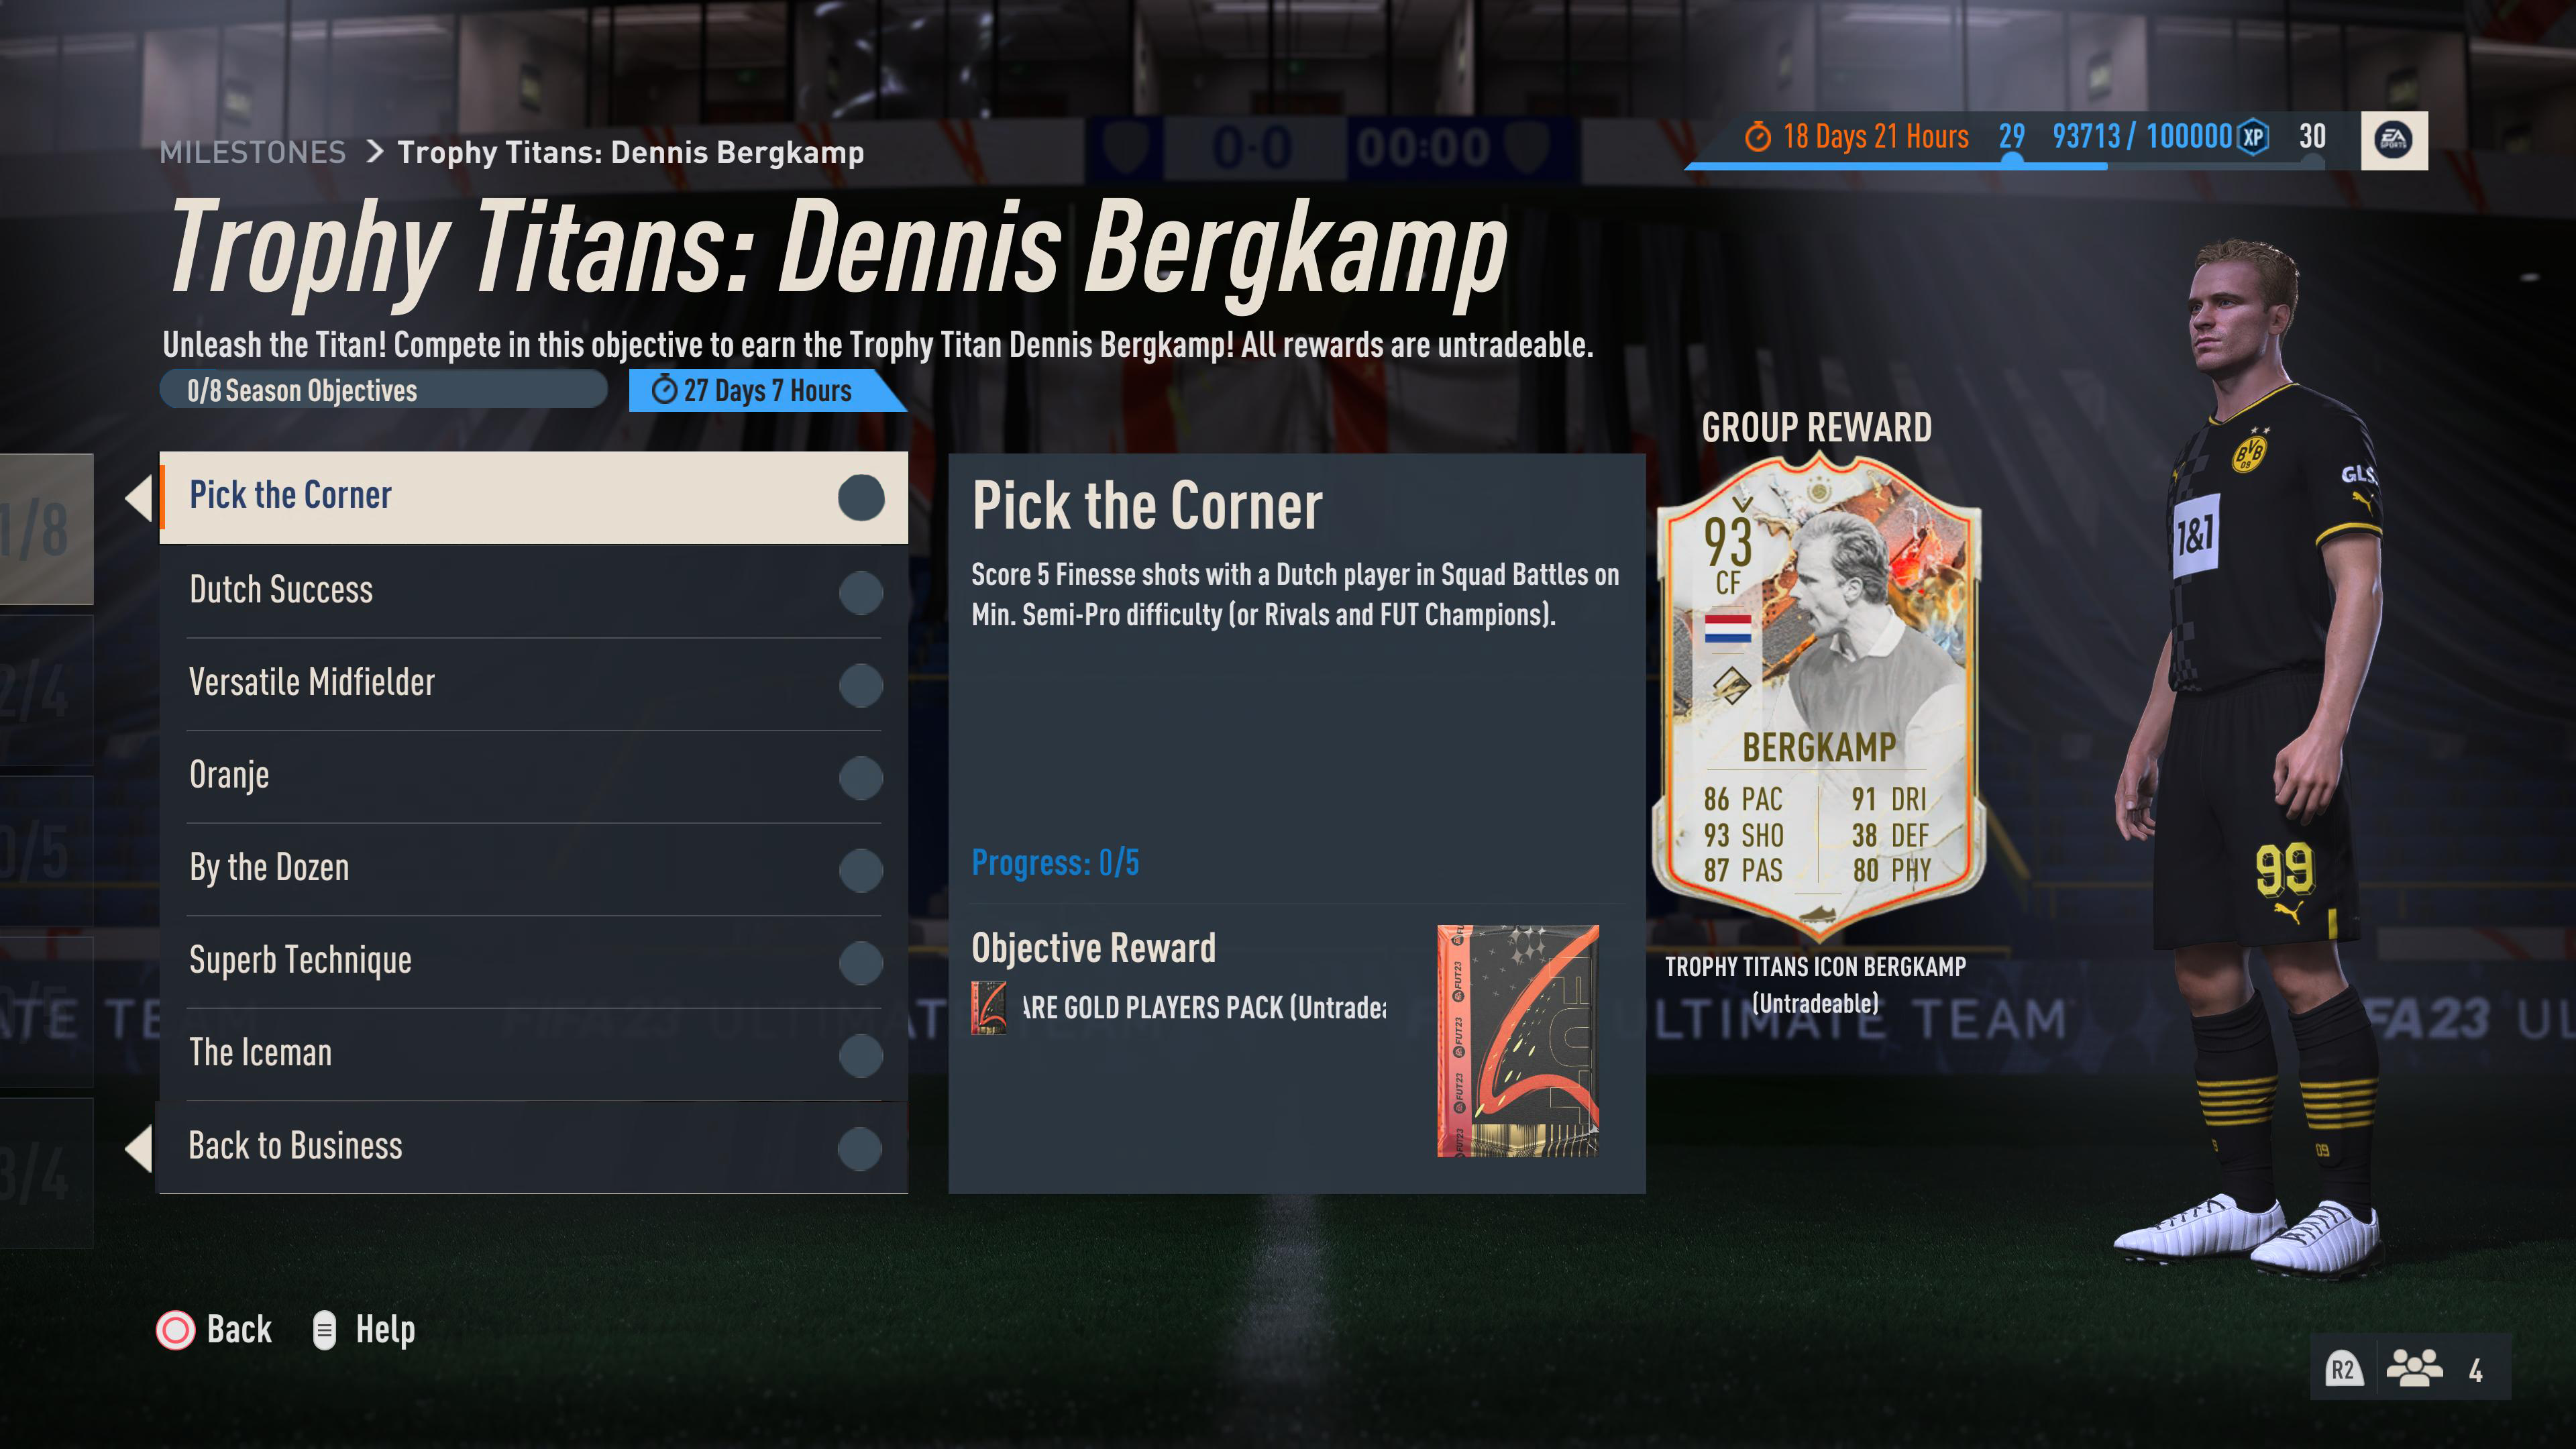 Trophy Titan Dennis Bergkamp Objective